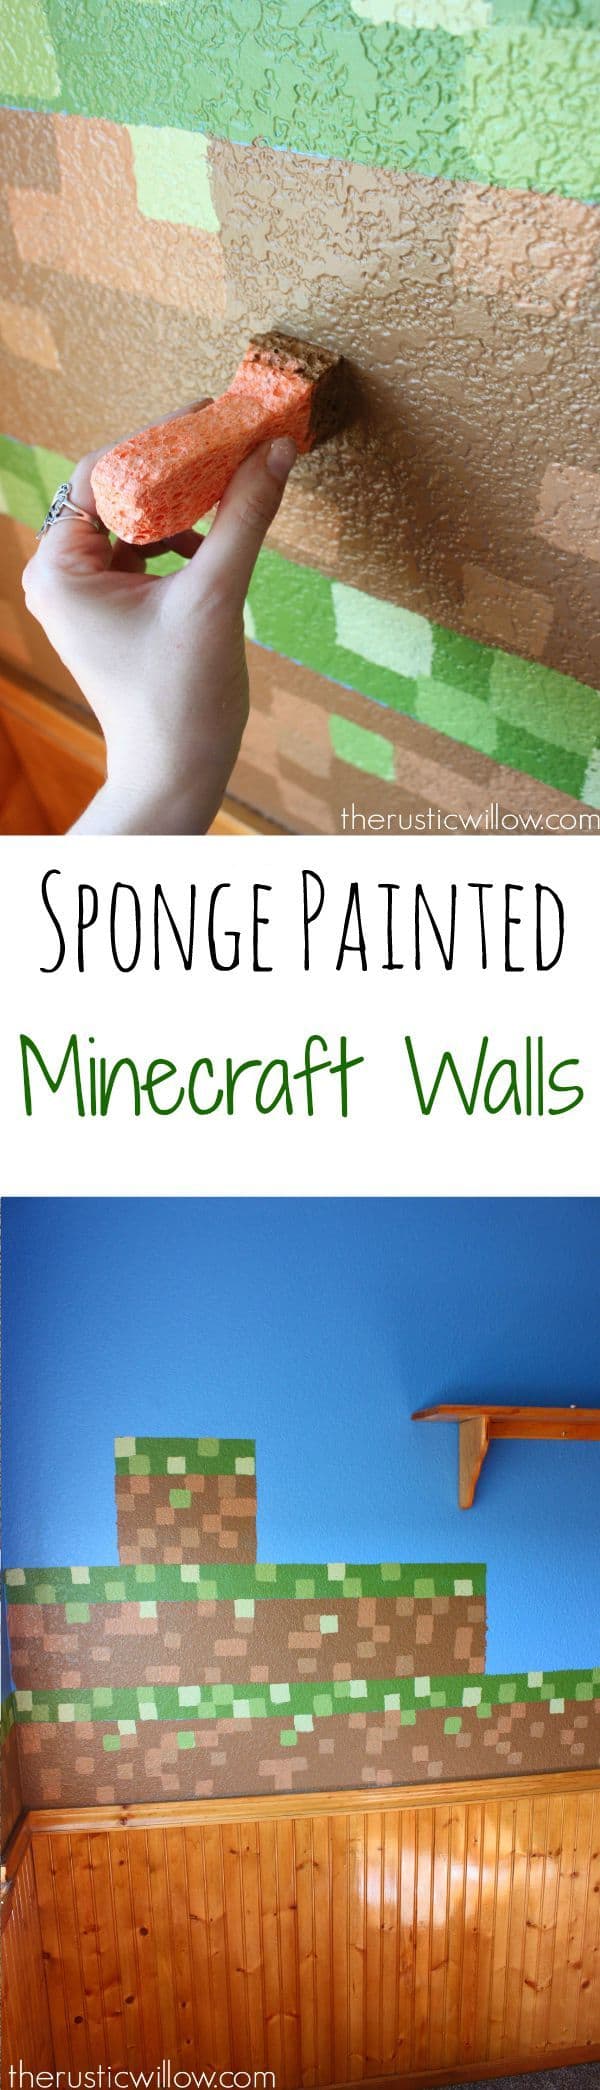 Sponge painted minecraft wall